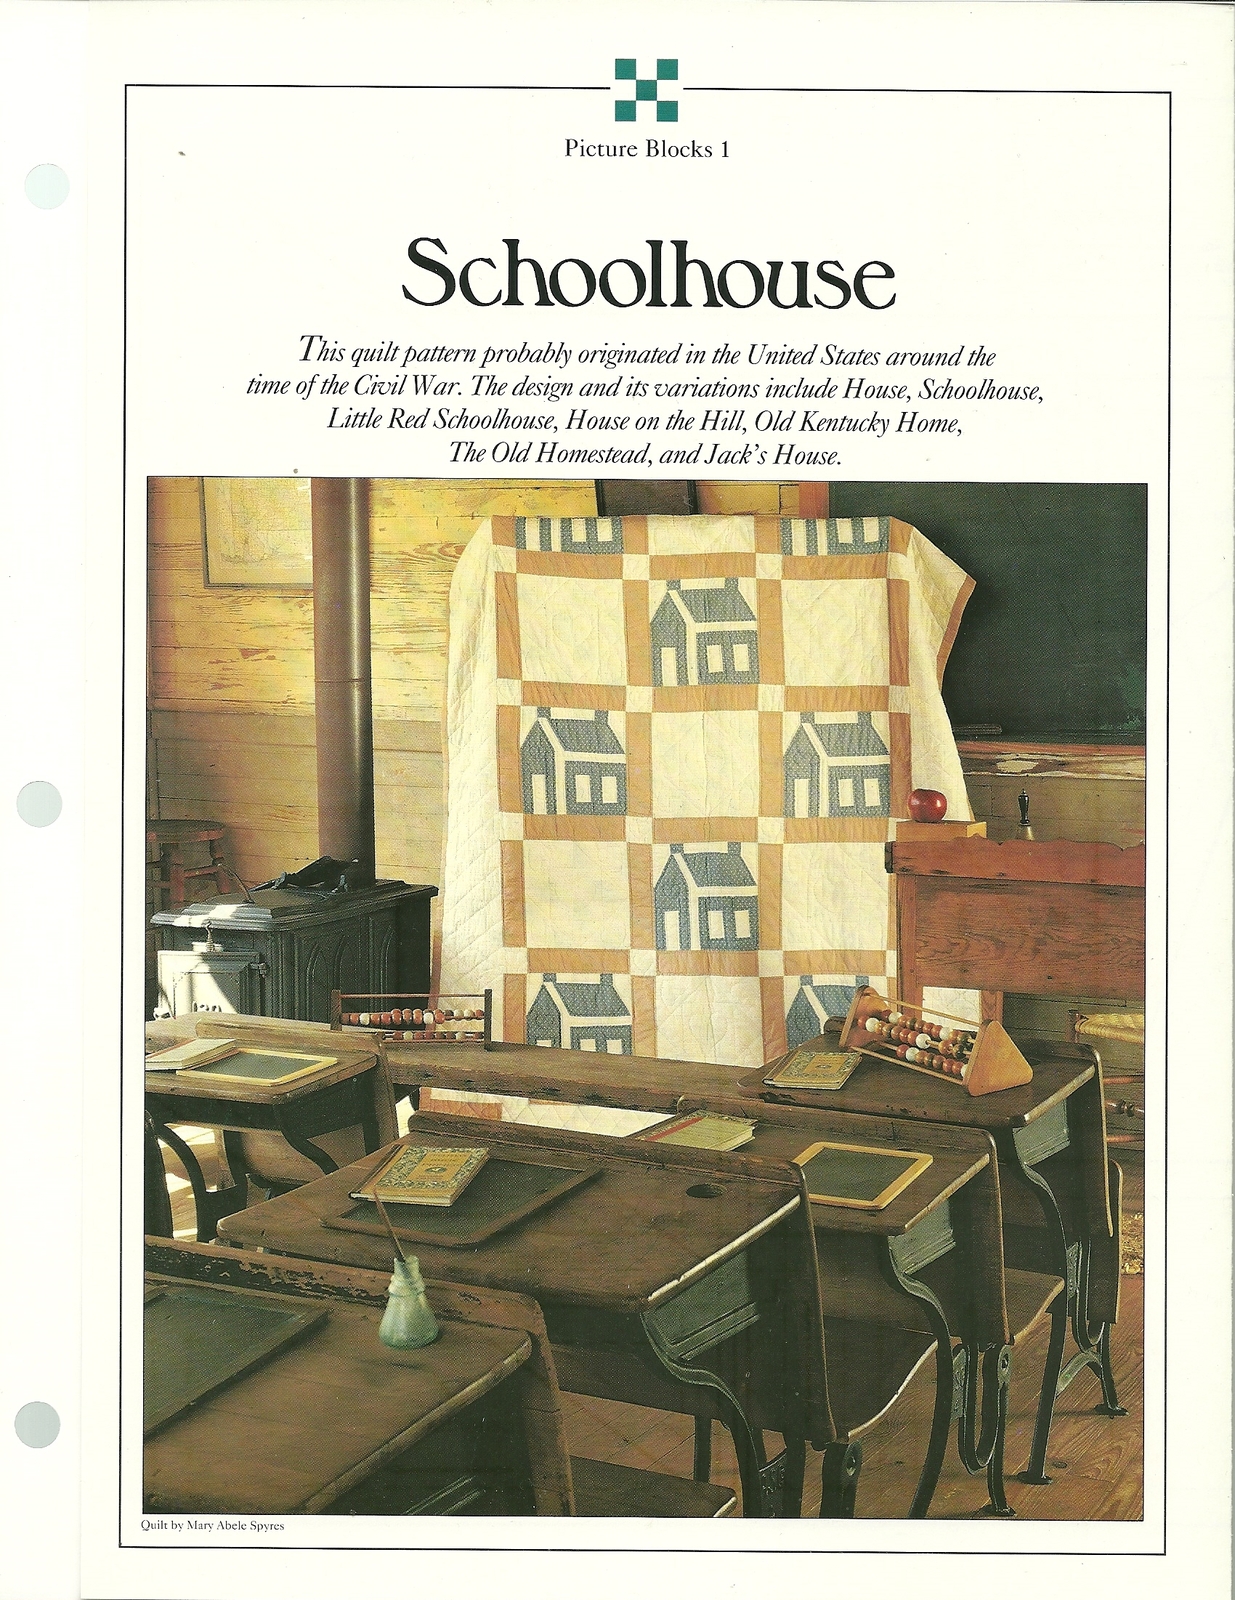 Schoolhouse Quilt Design Leaflet with Templates - $1.99